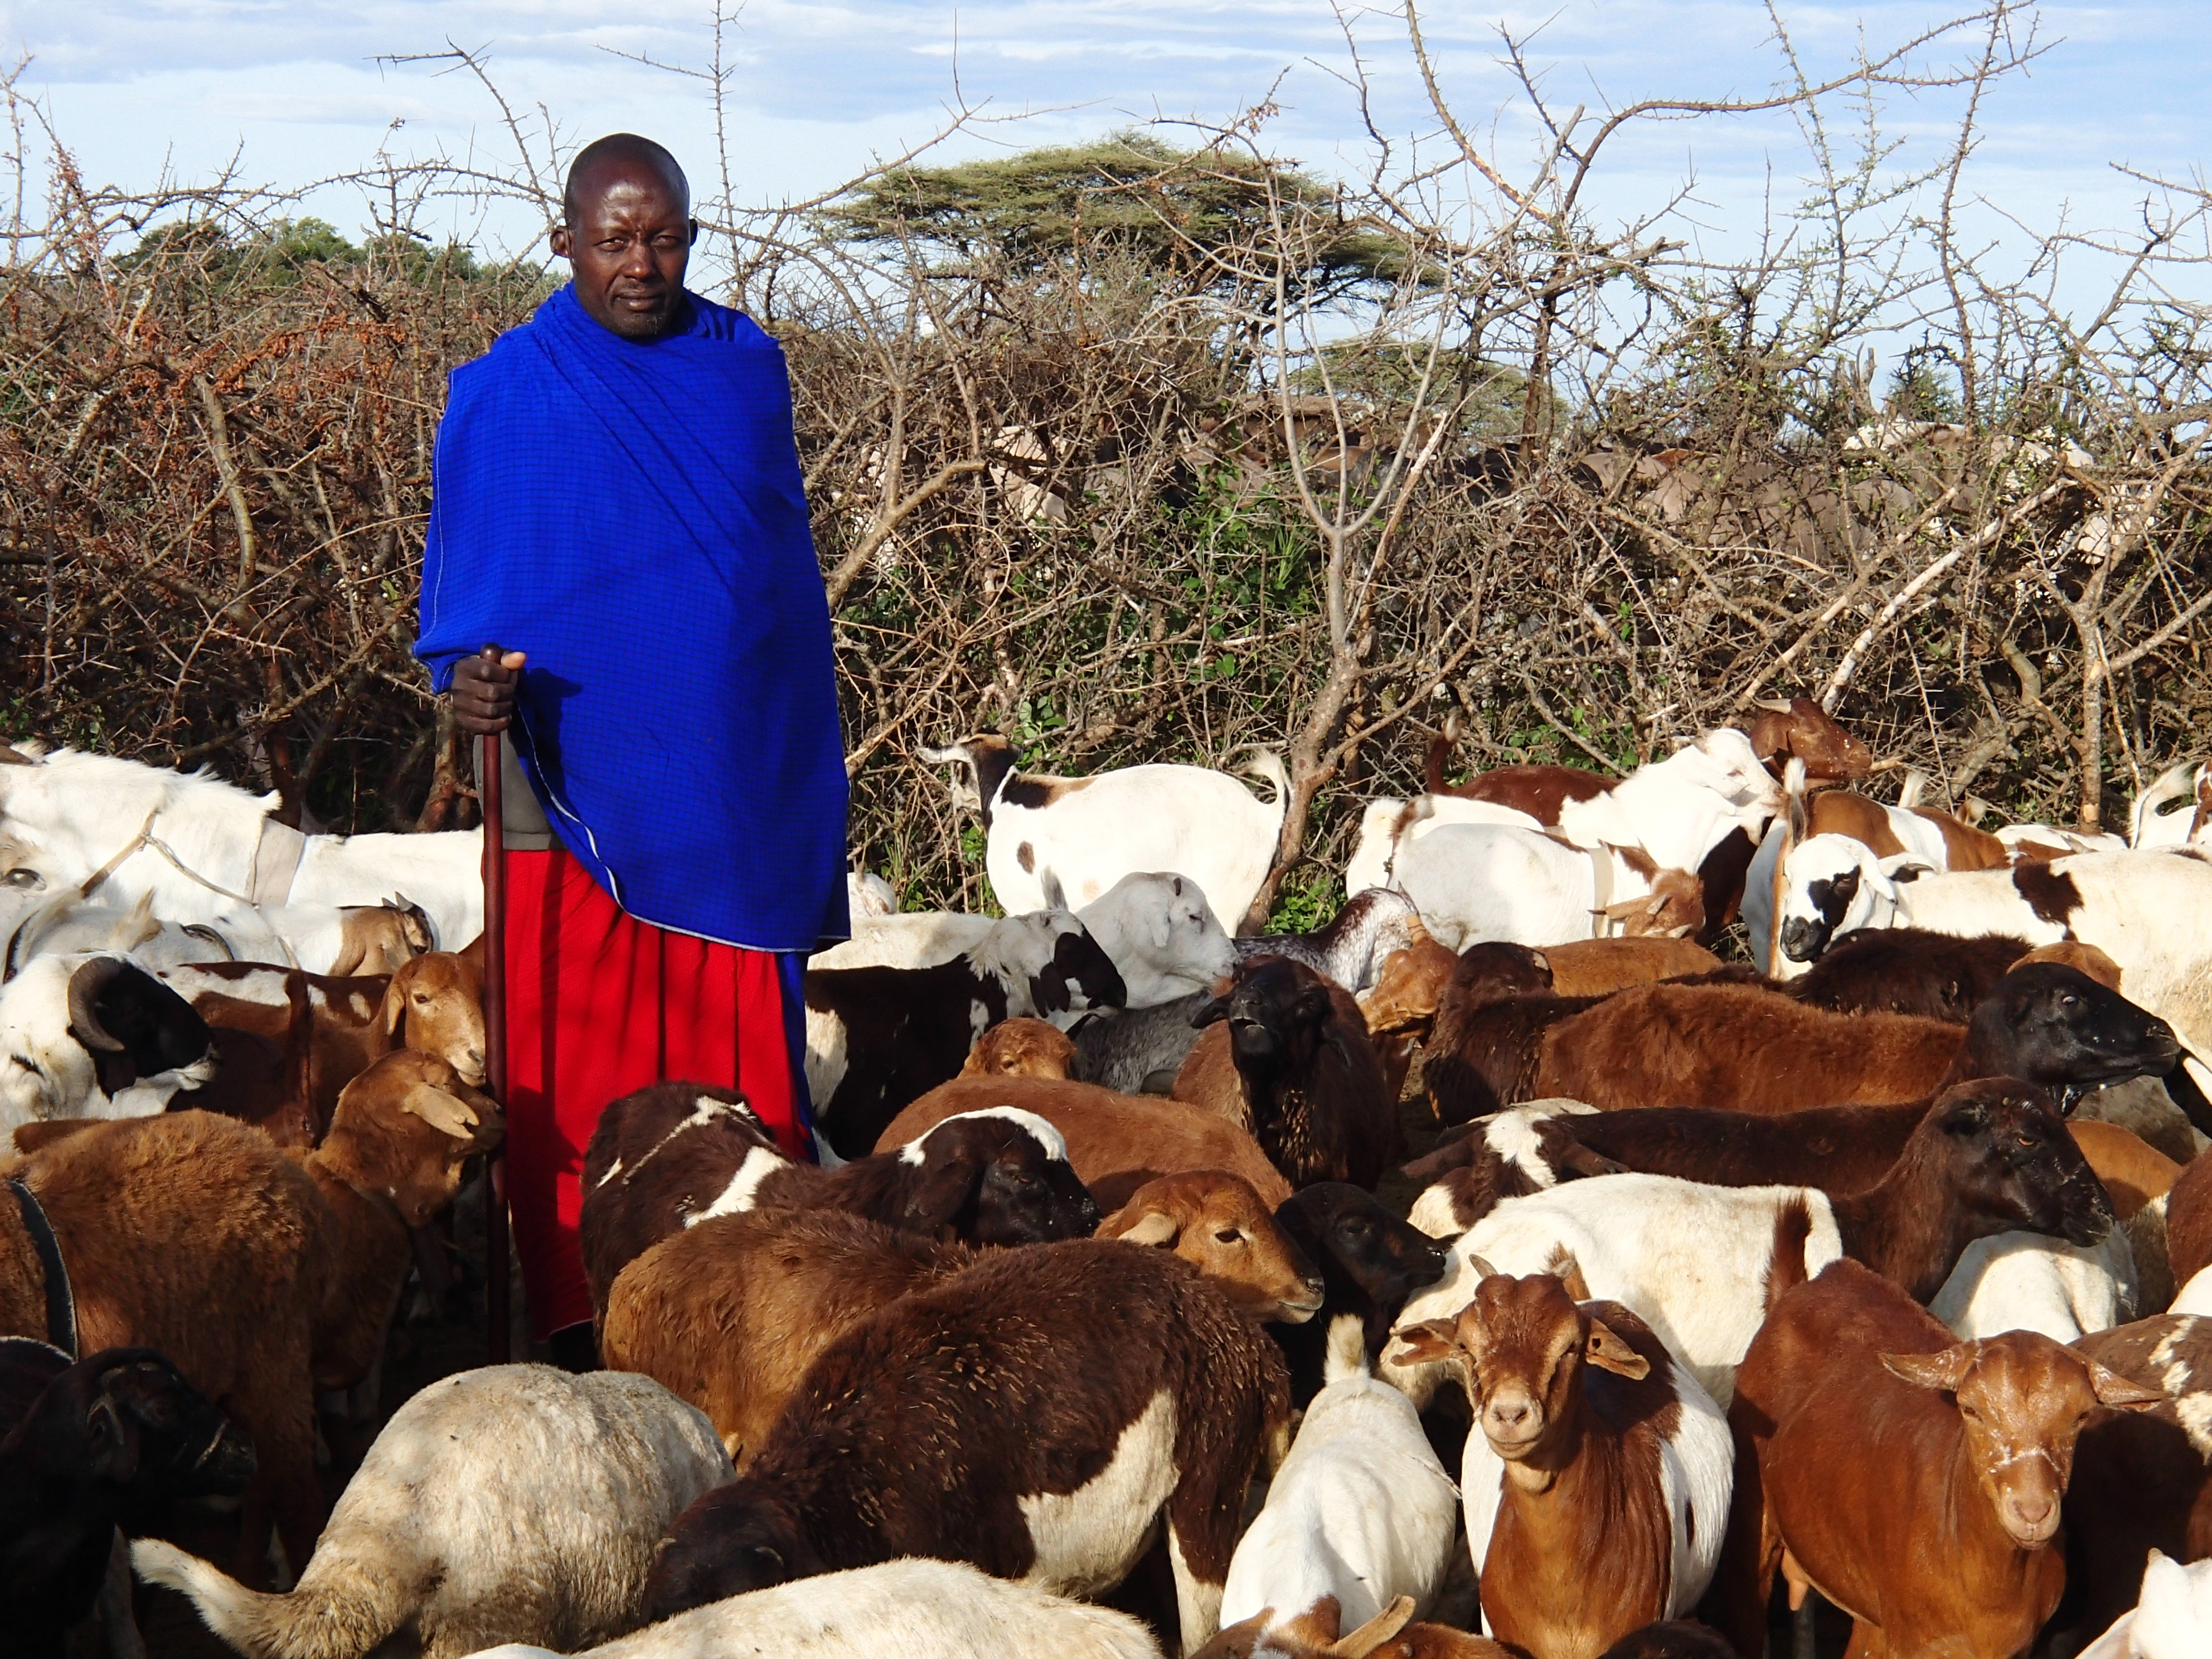 Massai and livestock